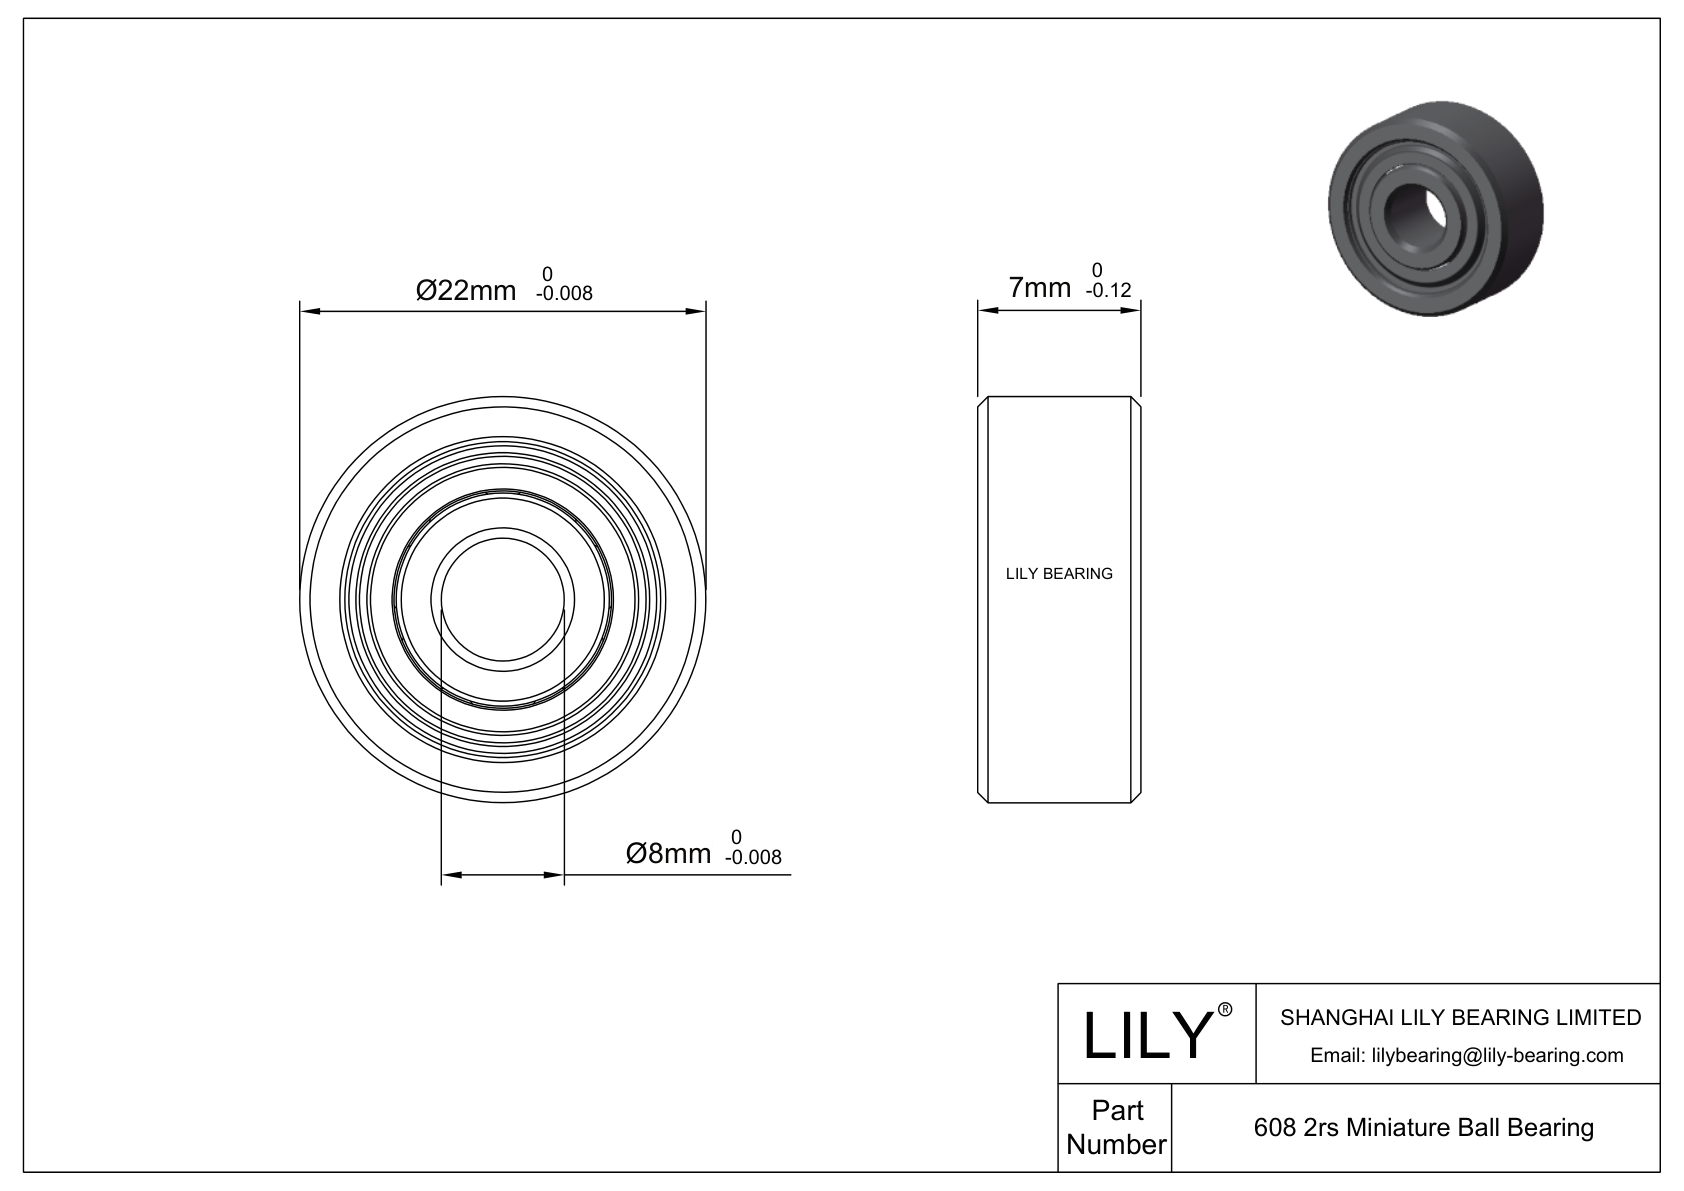 LILY-PU60828-10 Polyurethane Coated Bearing cad drawing